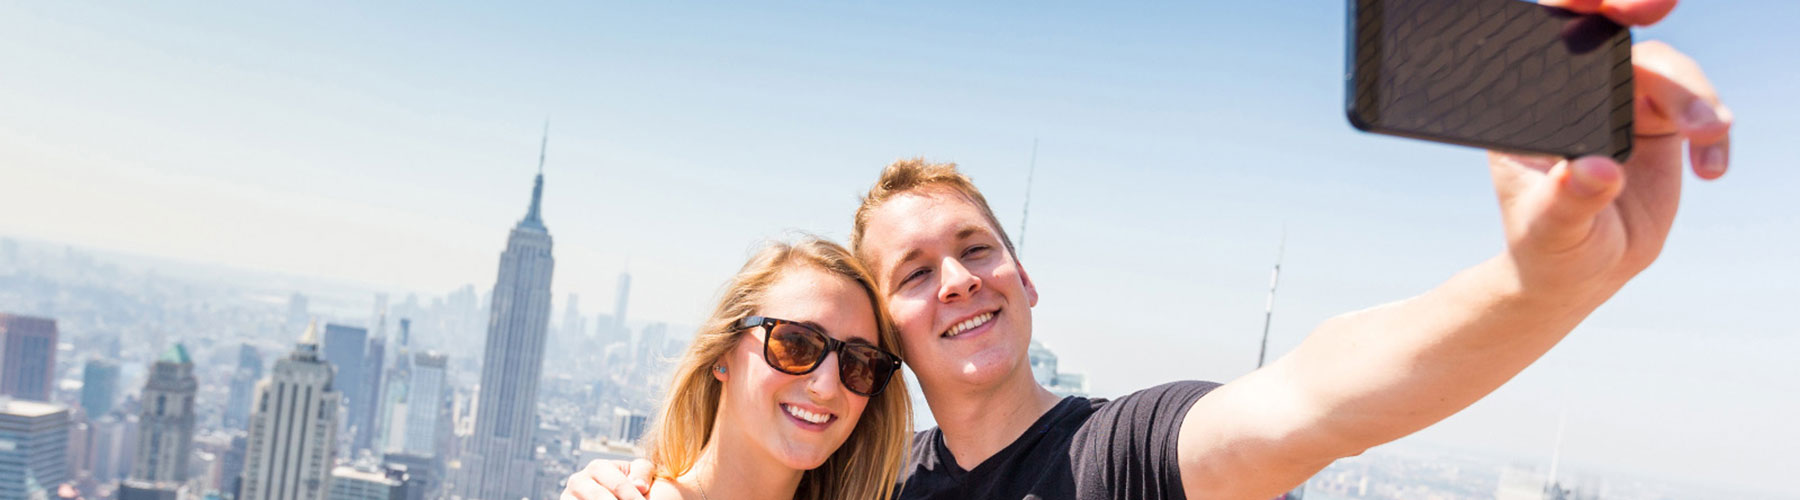 Happy Couple taking a selfie on top of a skyscraper